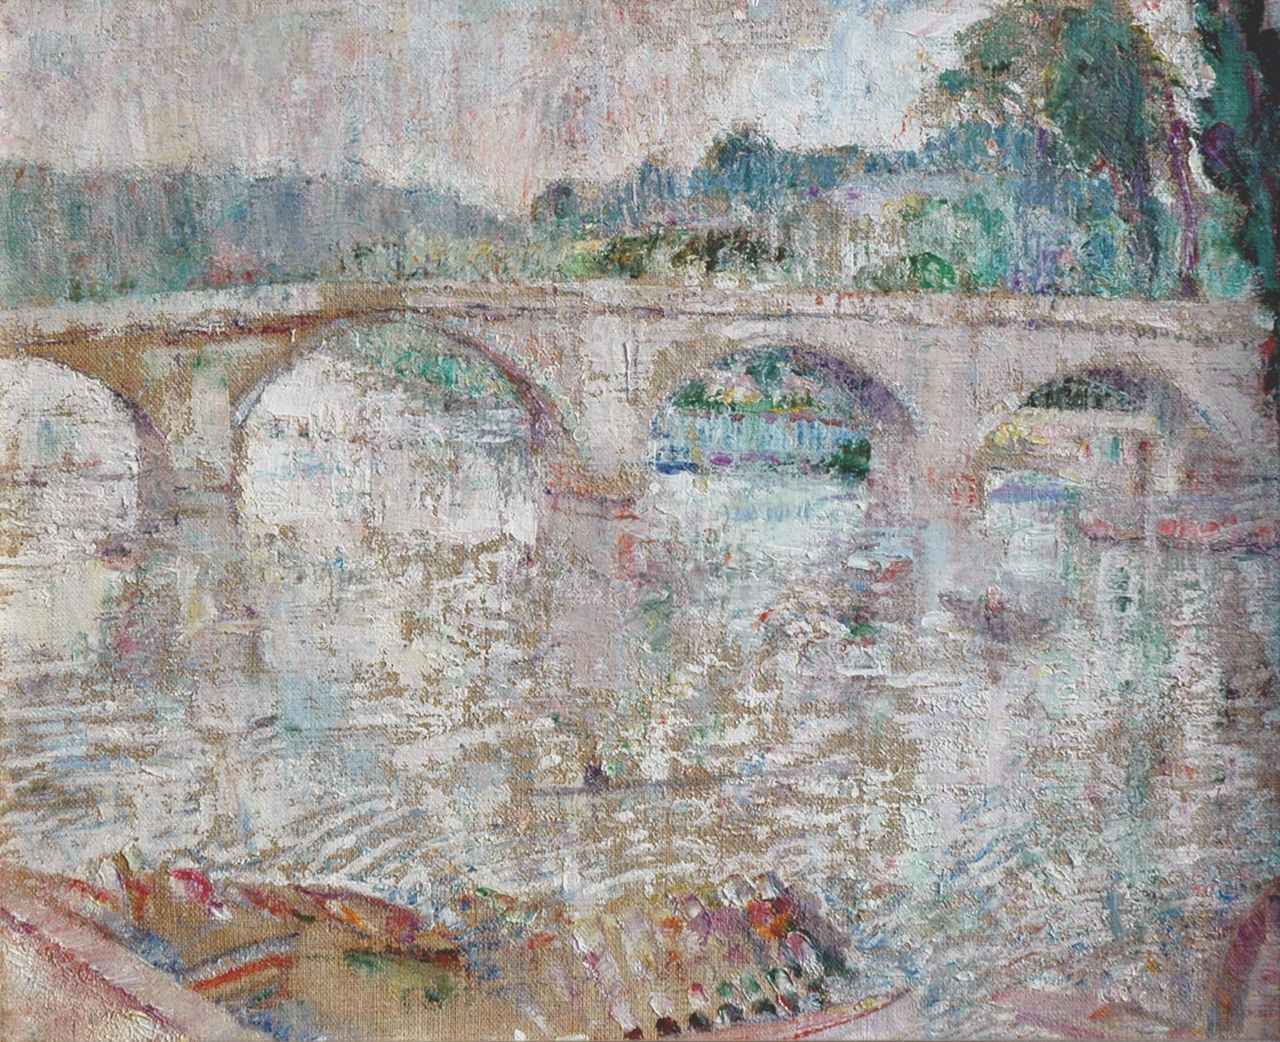 Maurice Wagemans | A river view, Öl auf Leinwand, 50,7 x 61,0 cm